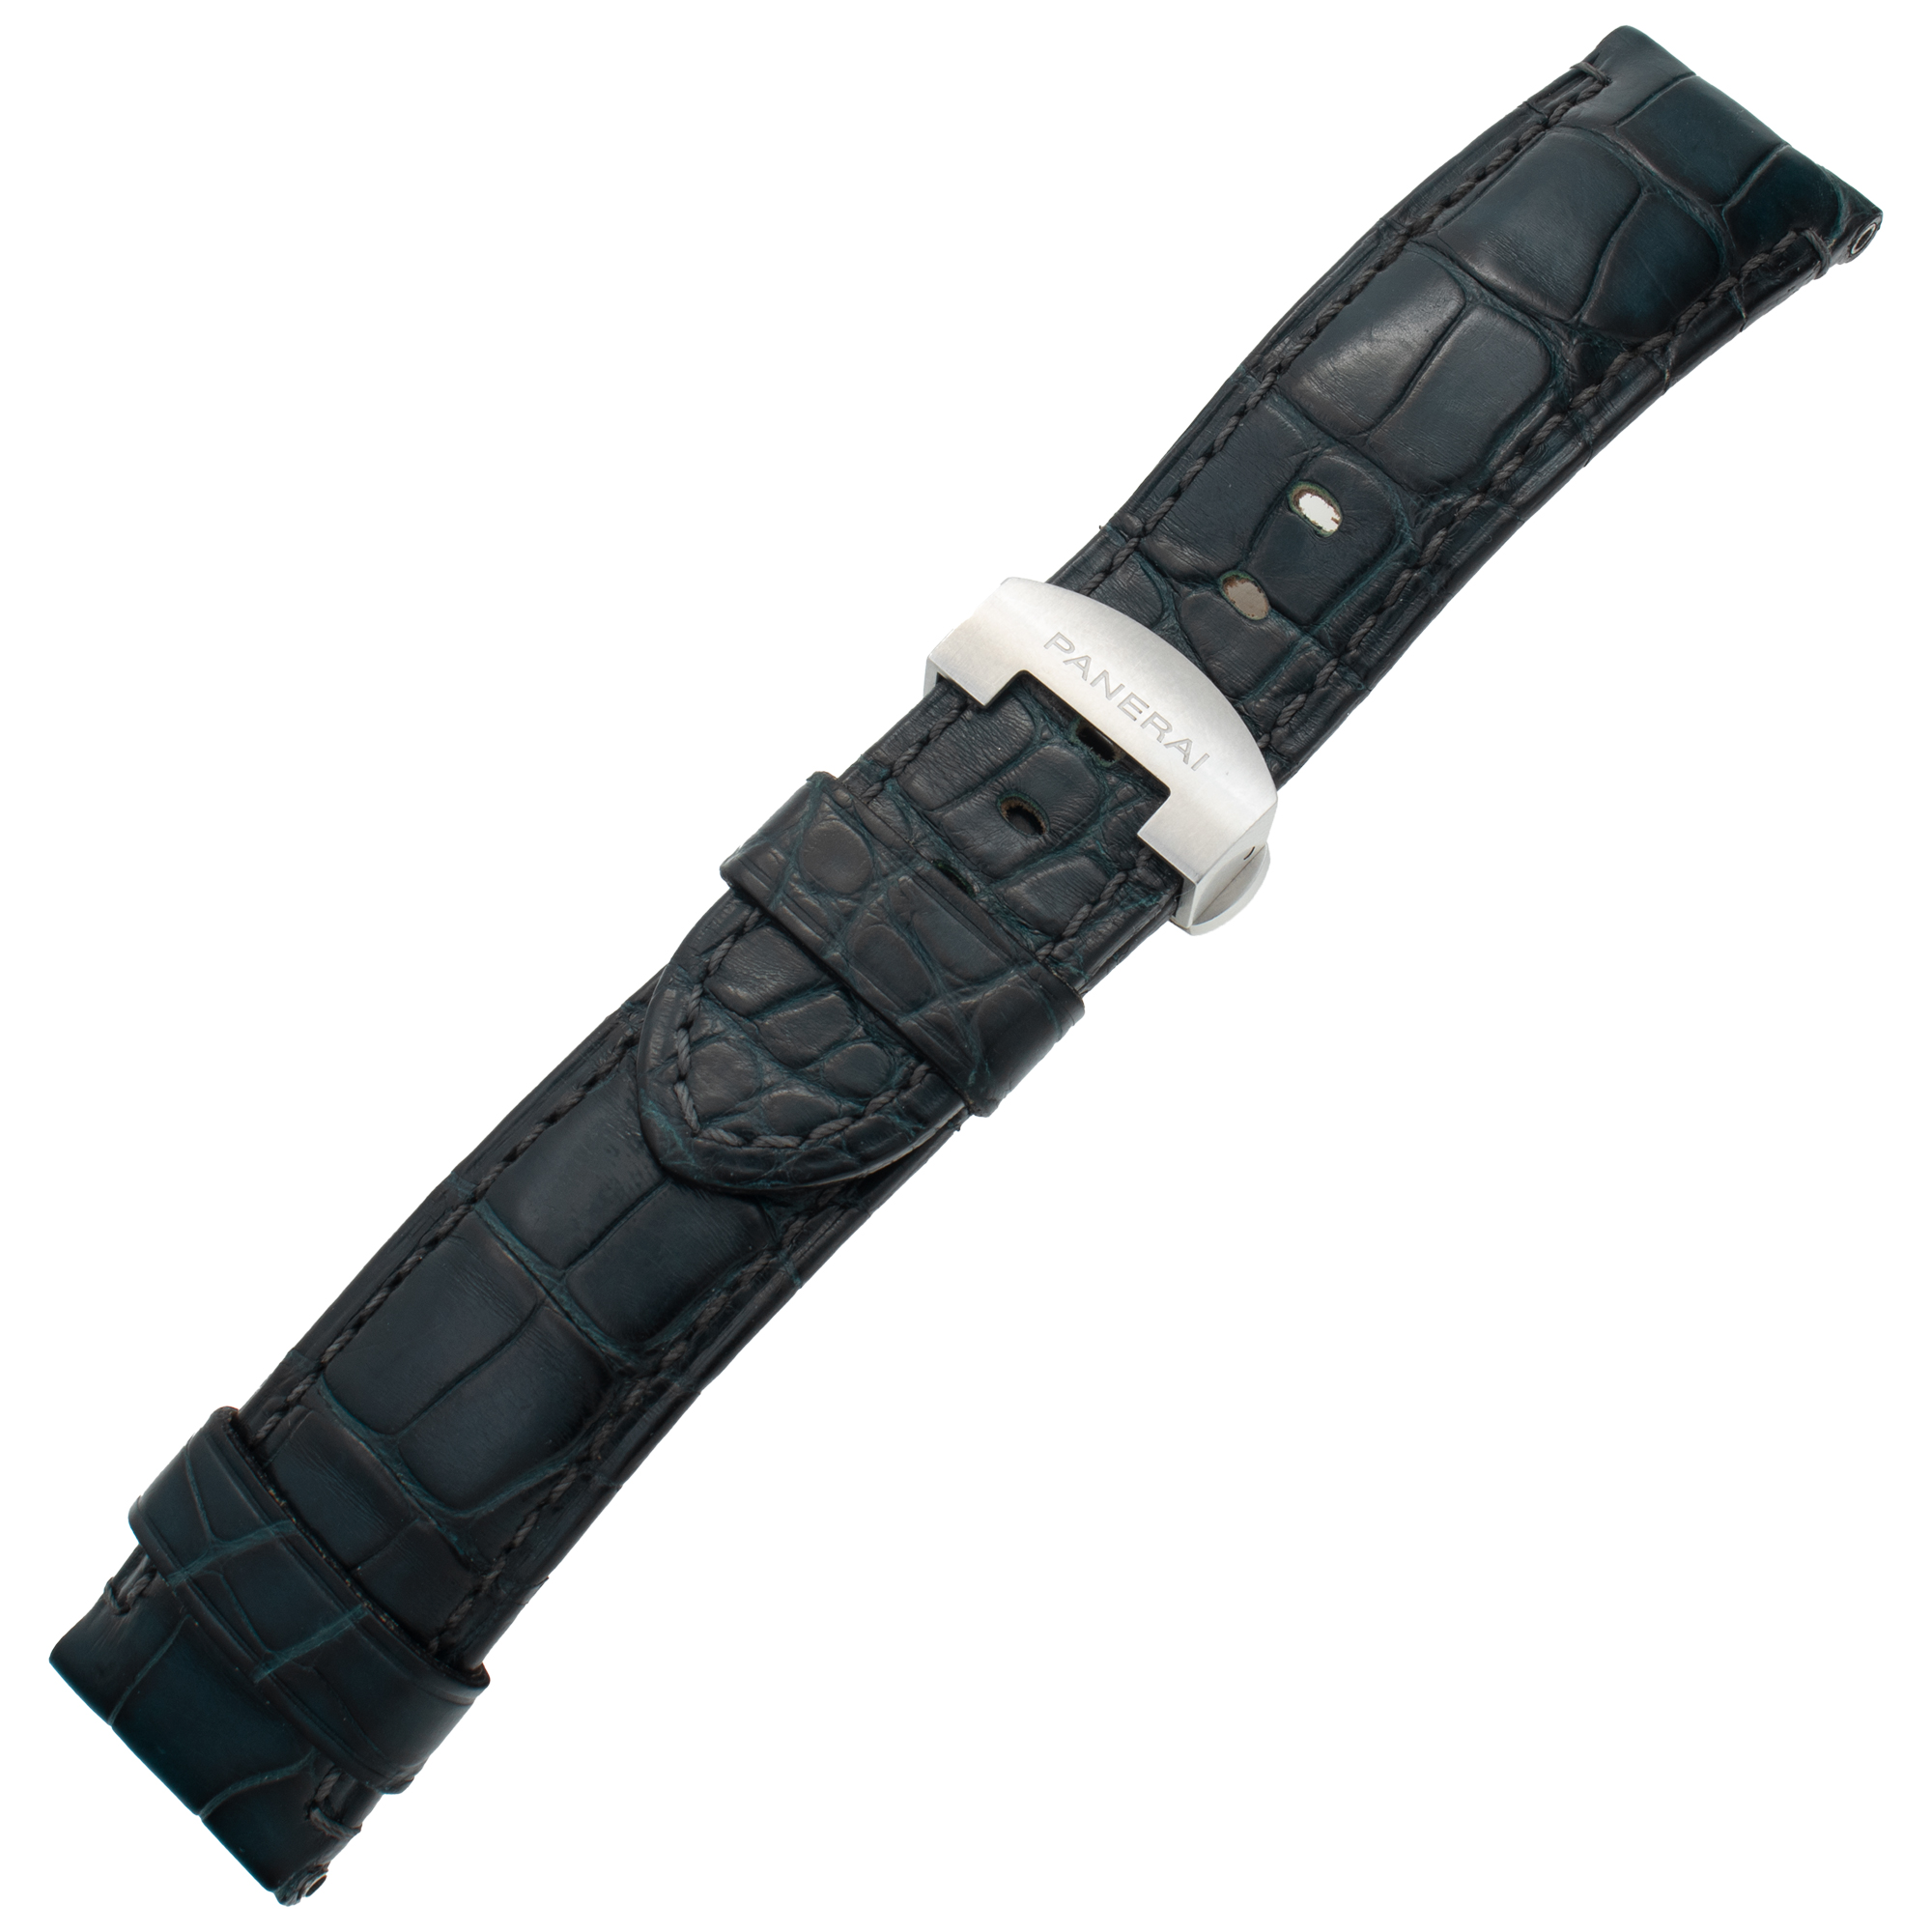 Gently worn Panerai black alligator strap with original Panerai deployant buckle